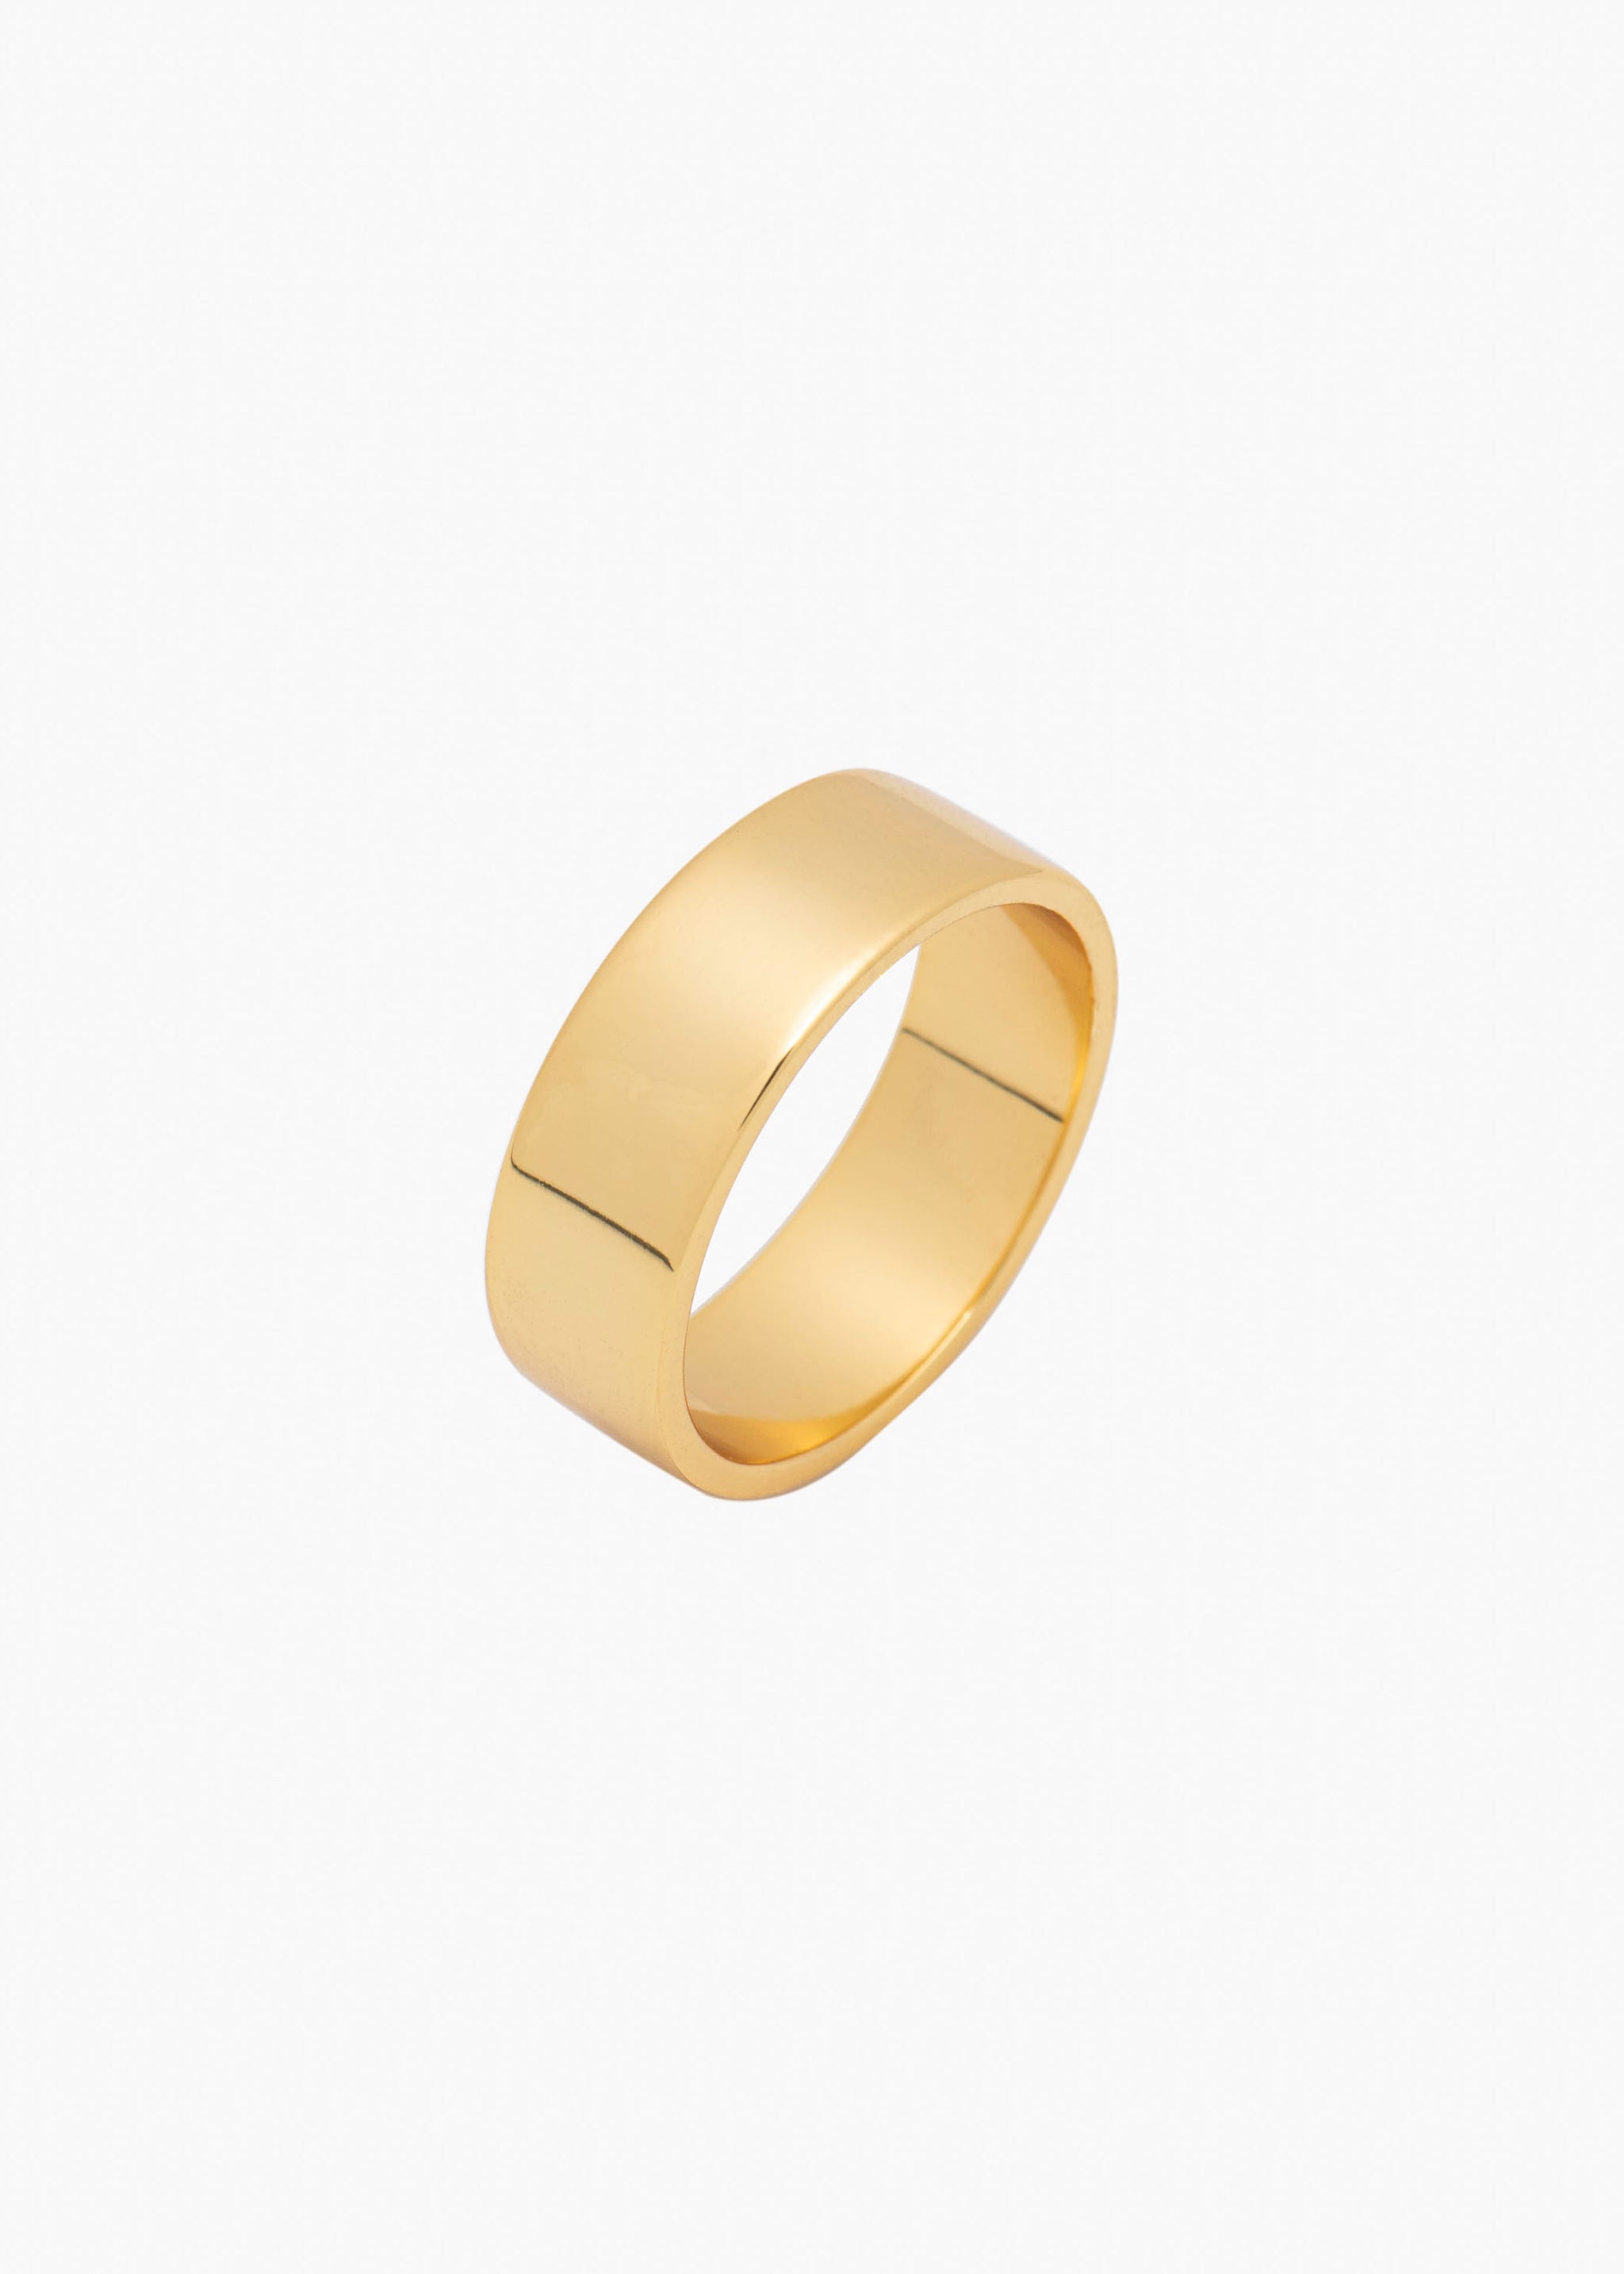 22ct Plain Gold Band Ring | Size O | Purejewels UK